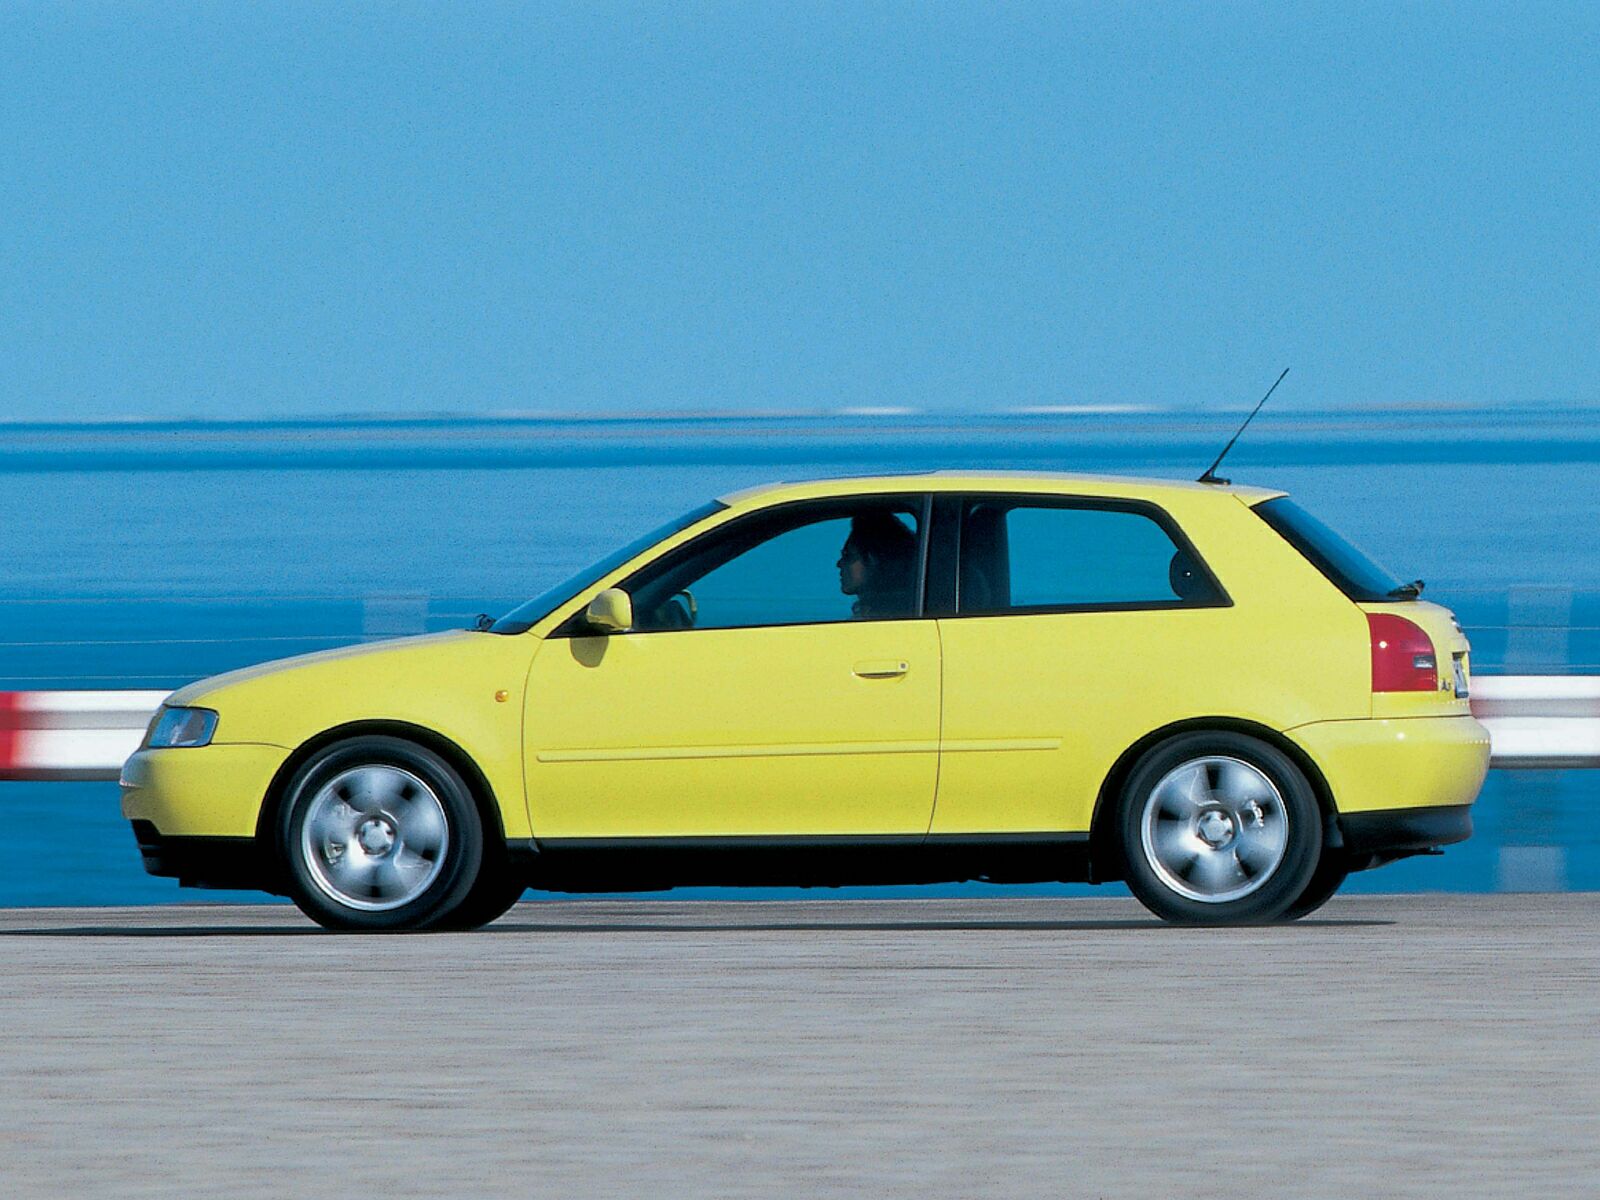 Audi A3 (1996-2003): Klassiker der Zukunft?